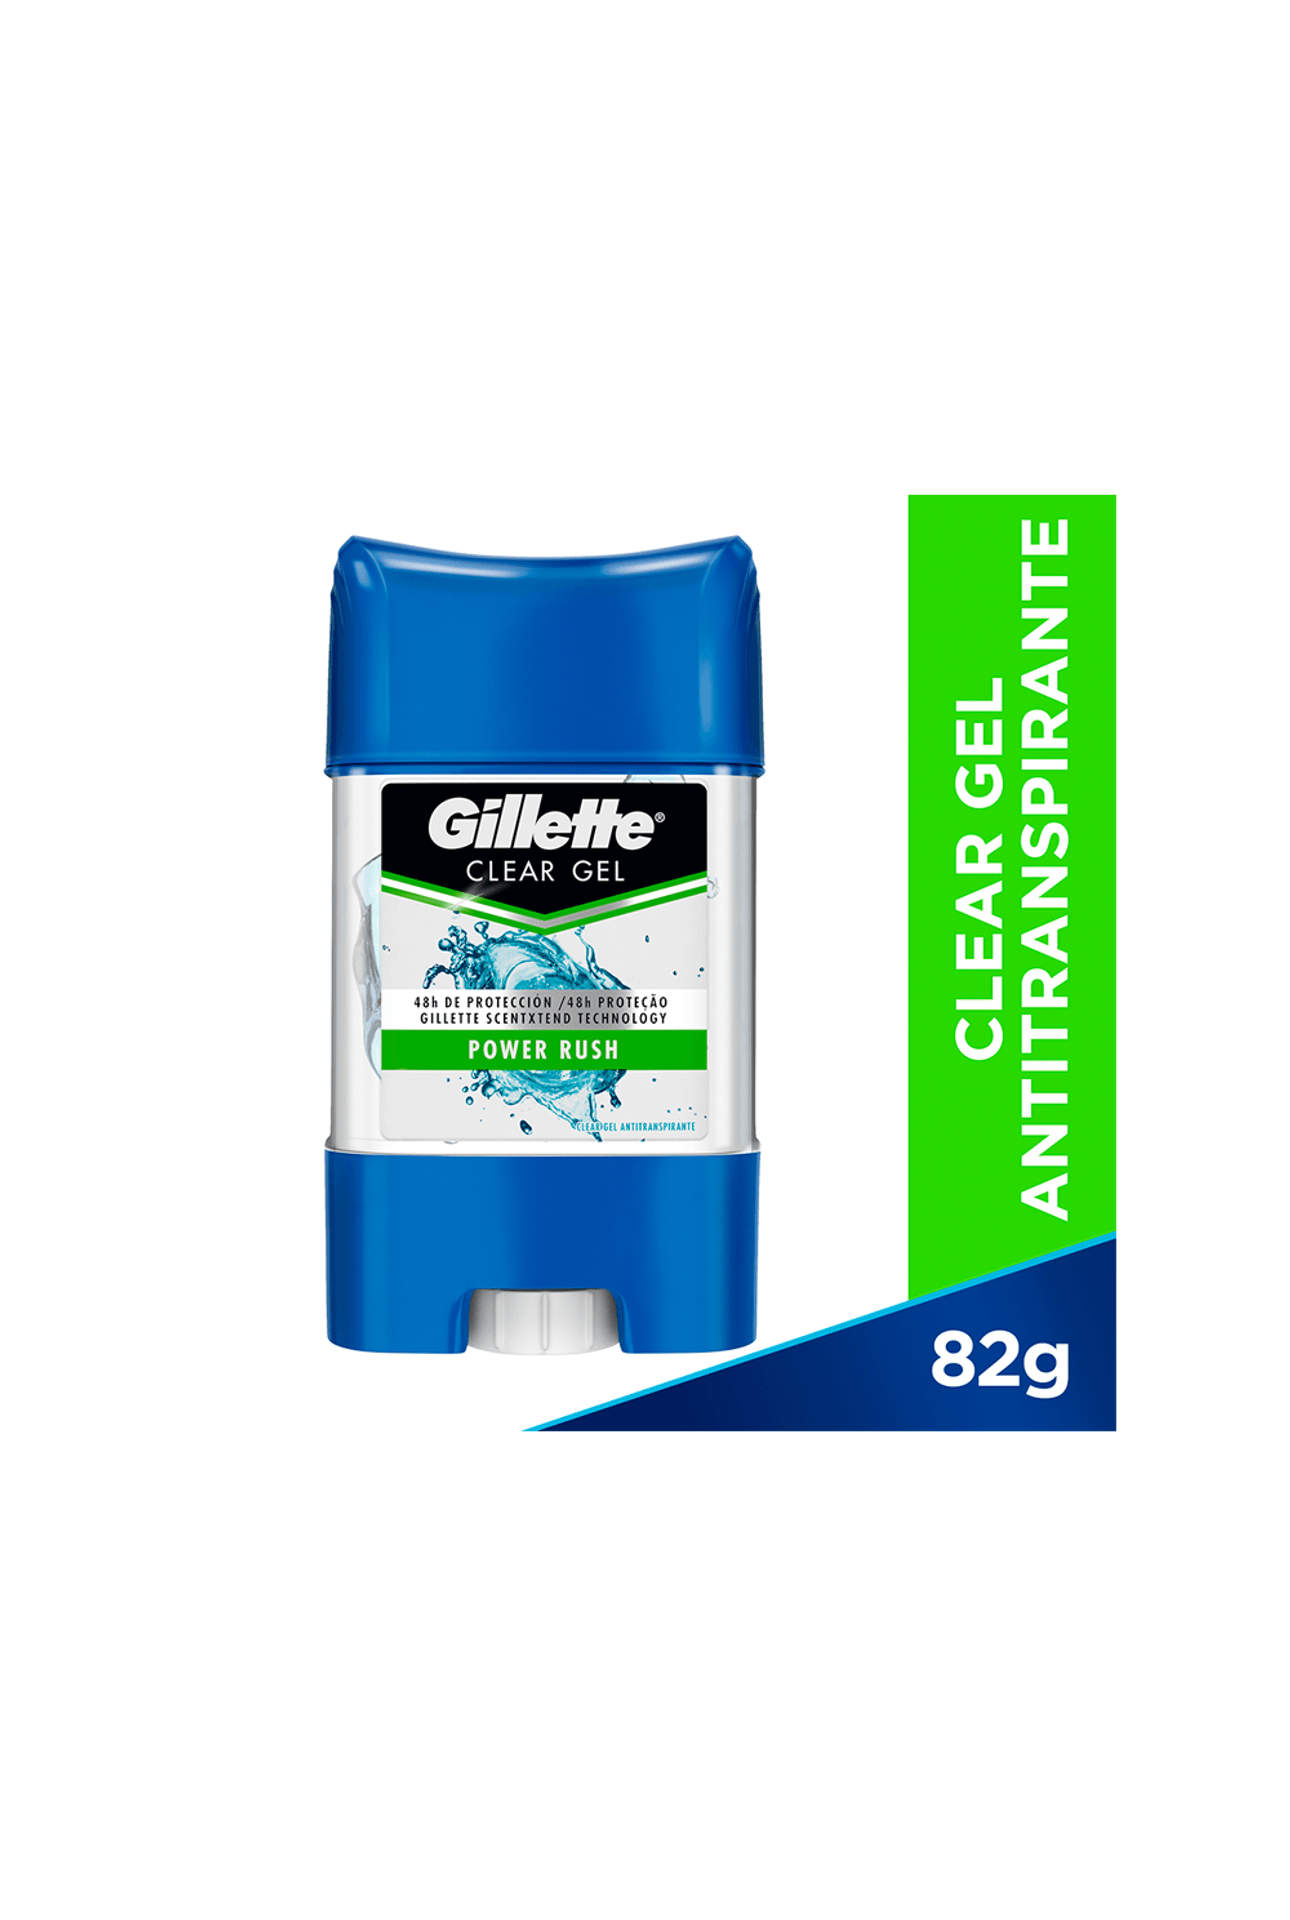 201210_Gillette-Desodorante-Gel-Gillette-Power-Rush-x-82g_img1